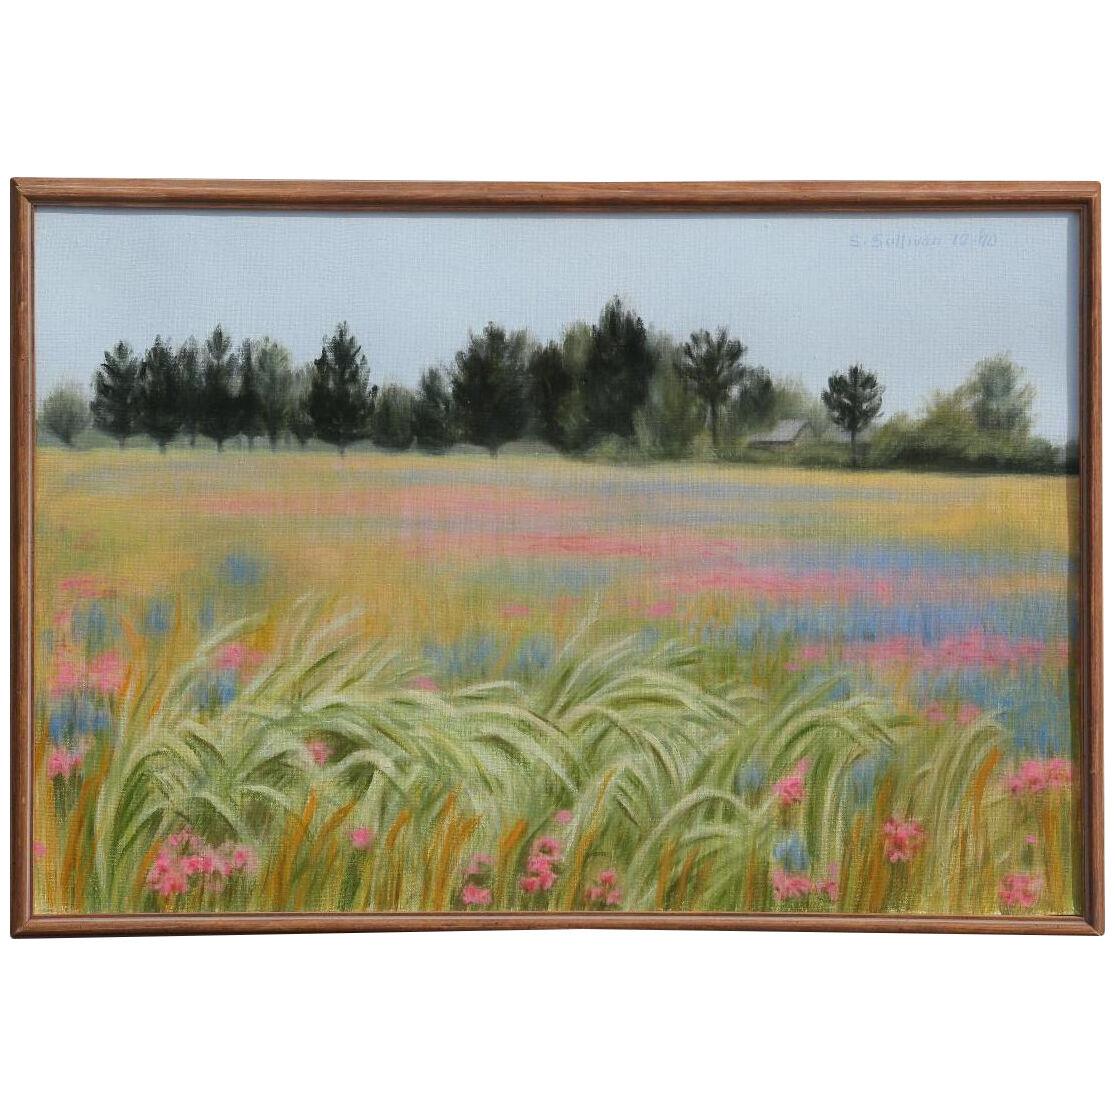 Stella Sullivan "Cedars with Phlox and Bluebonnets" Landscape Painting